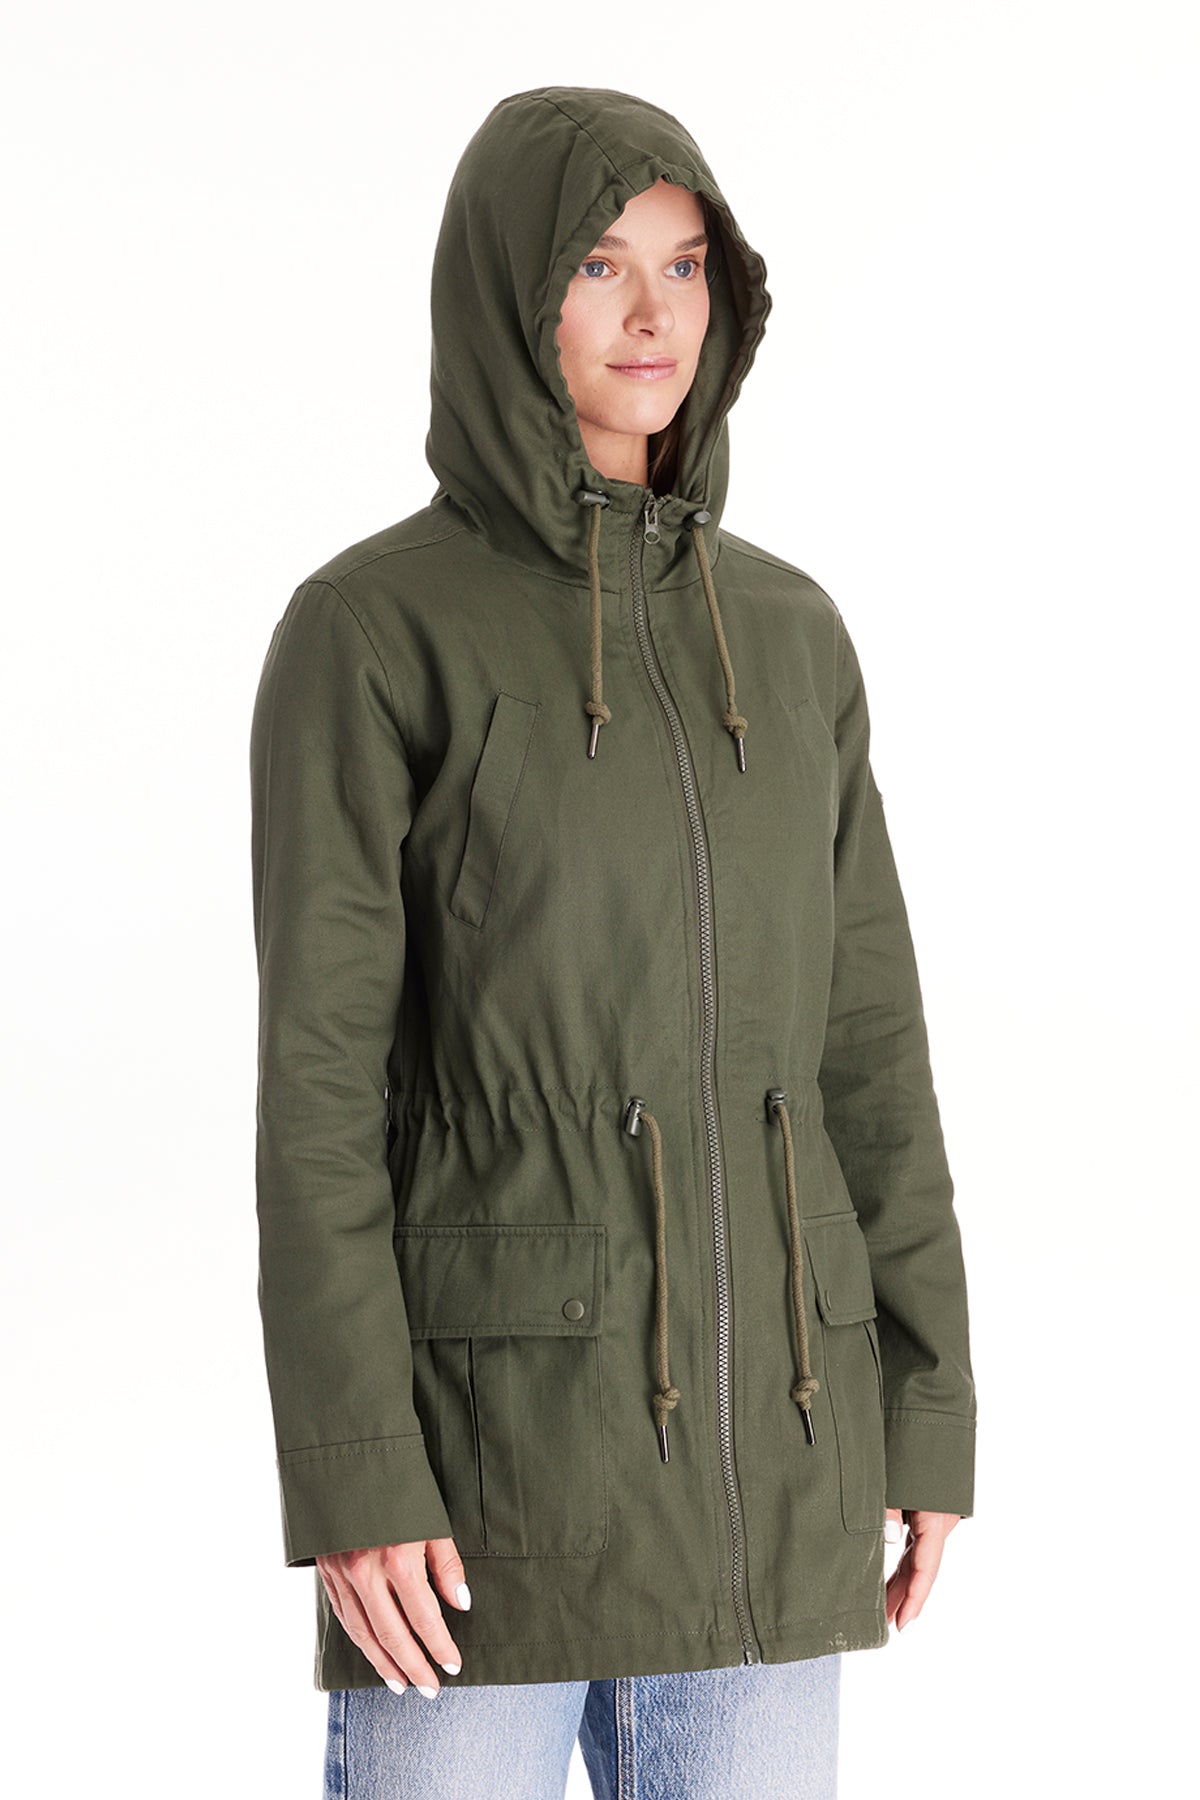 Maternity Jacket Lara 3 in 1 Military Style Cotton – Moderneternity